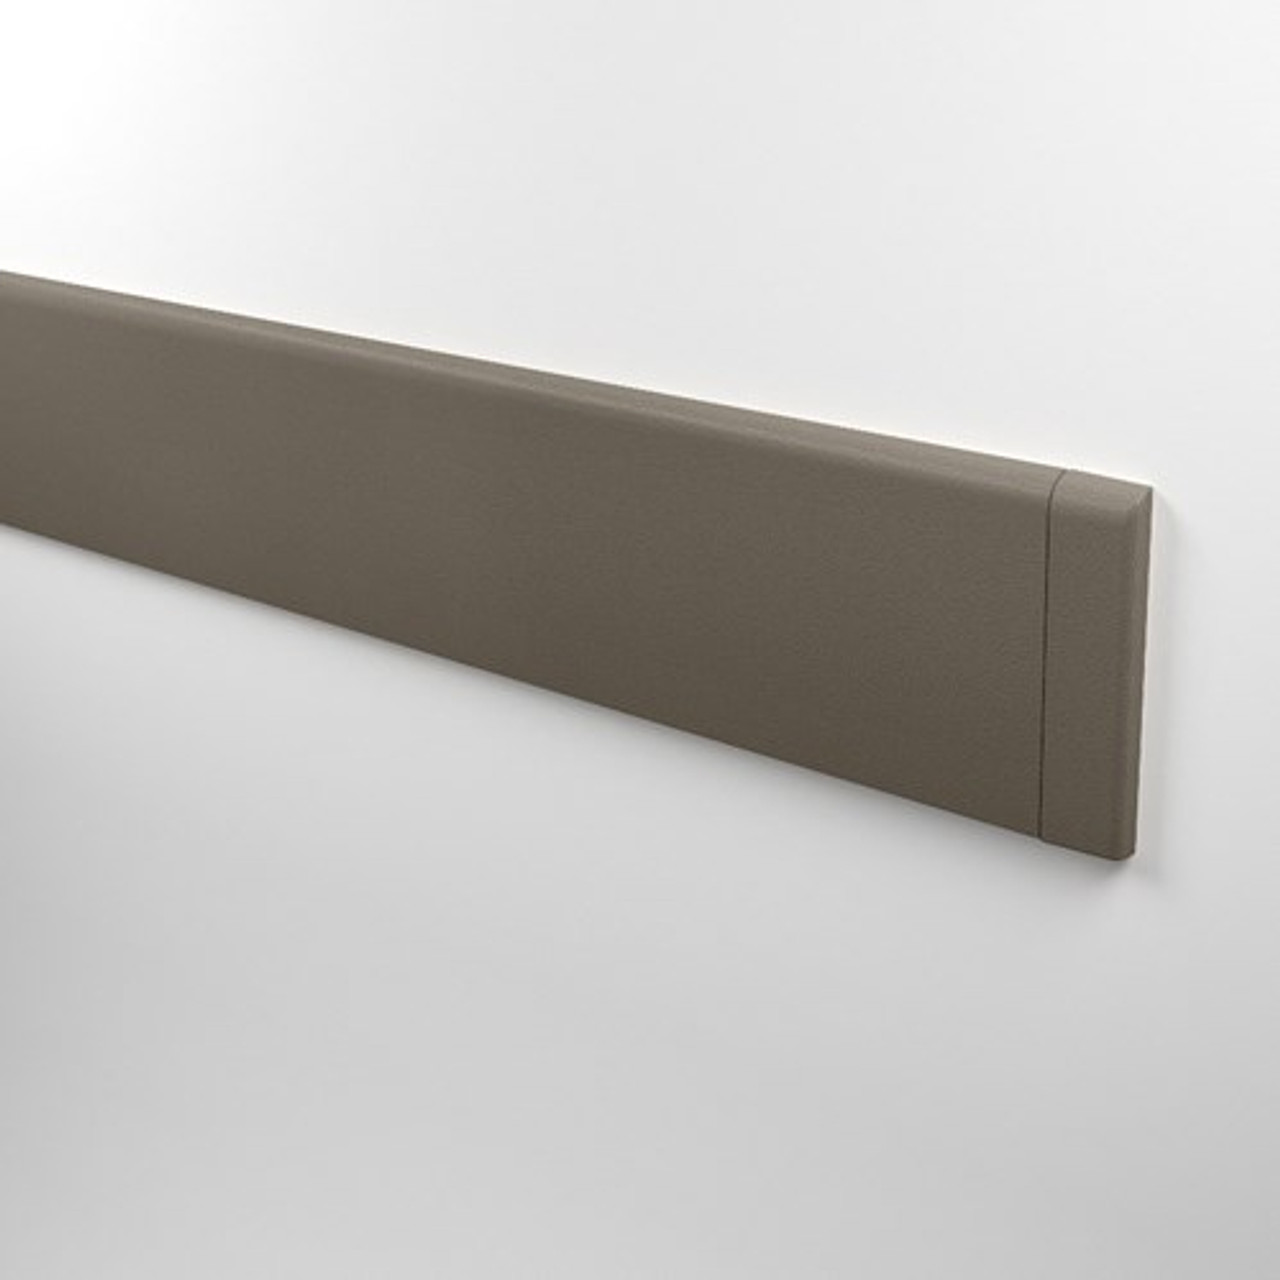 foam-board edge protector - sign channels - Popco